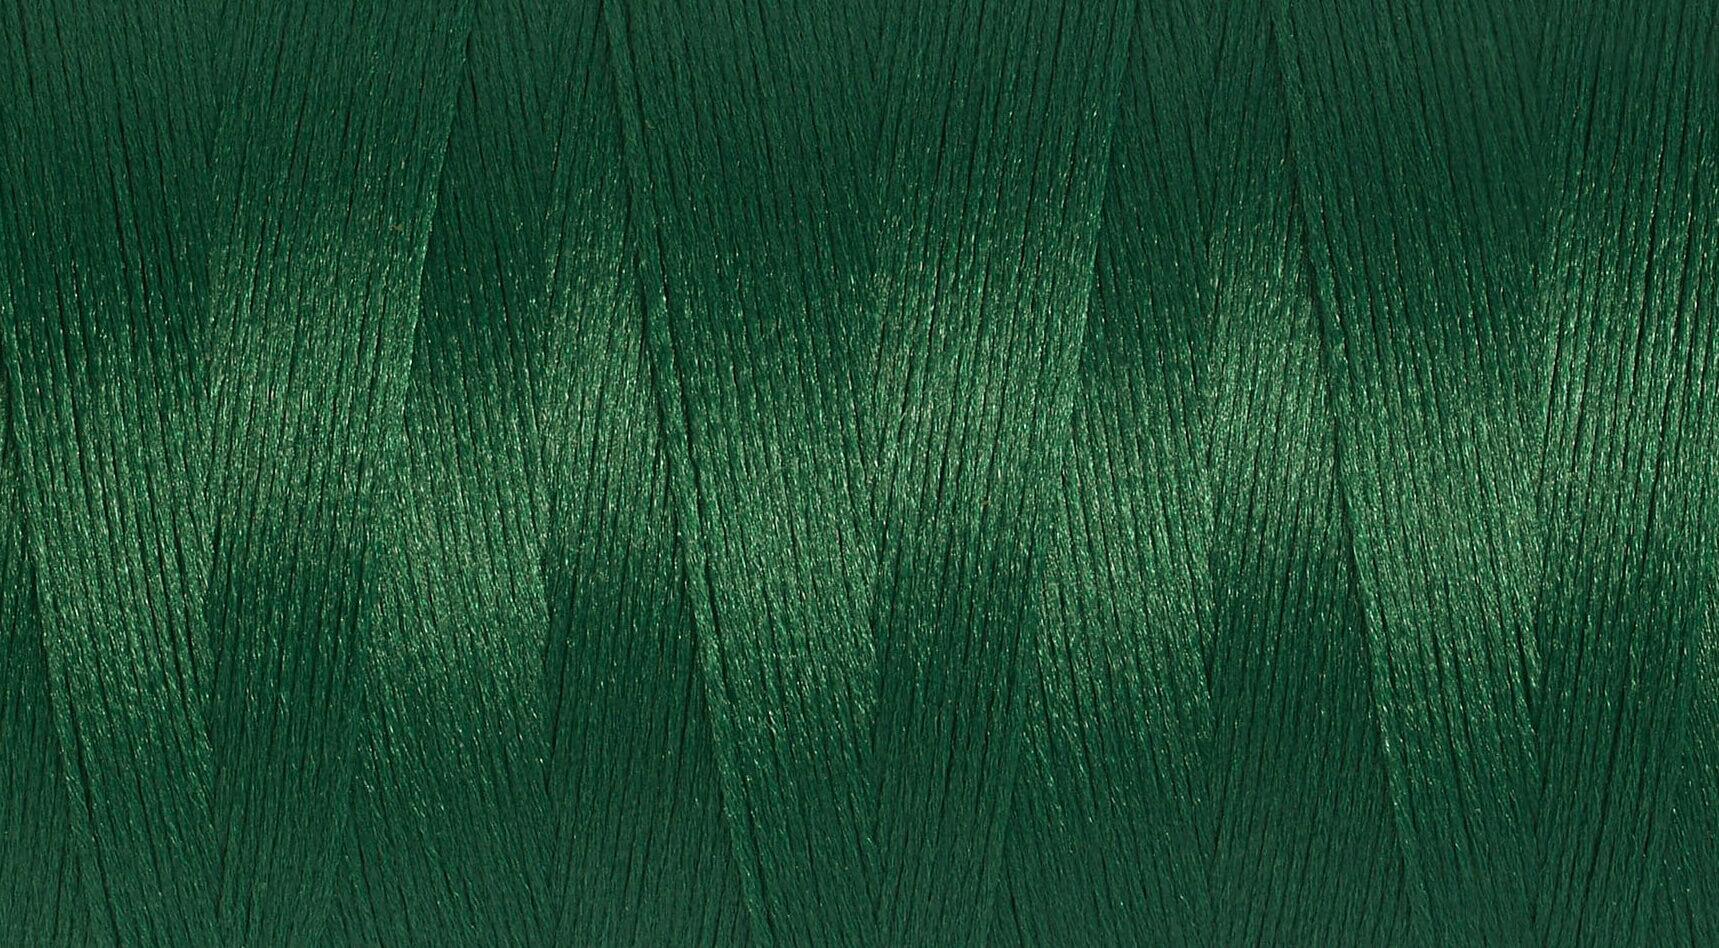 Gutermann Bulky-lock 160 2000m overlocking thread in colour number 340 Amazon Green